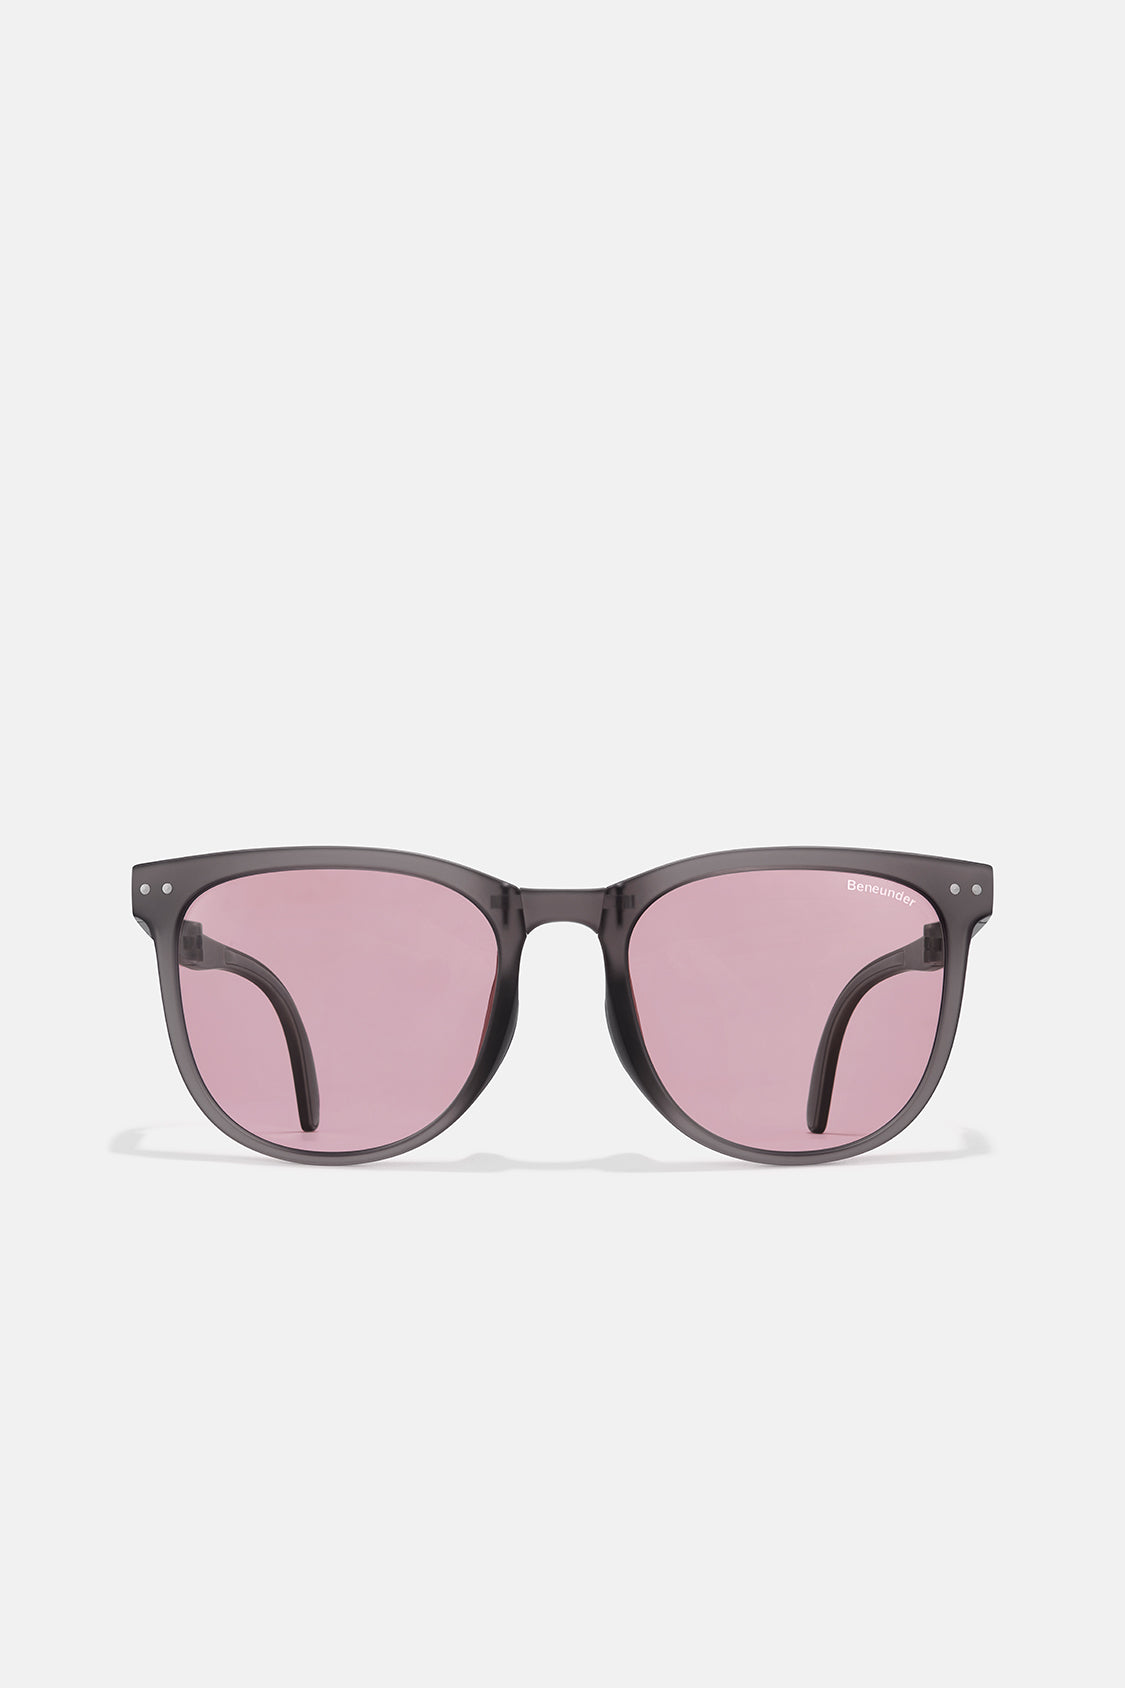 beneunder men's dawn polarized folding sunglasses shades #color_light coffee pink